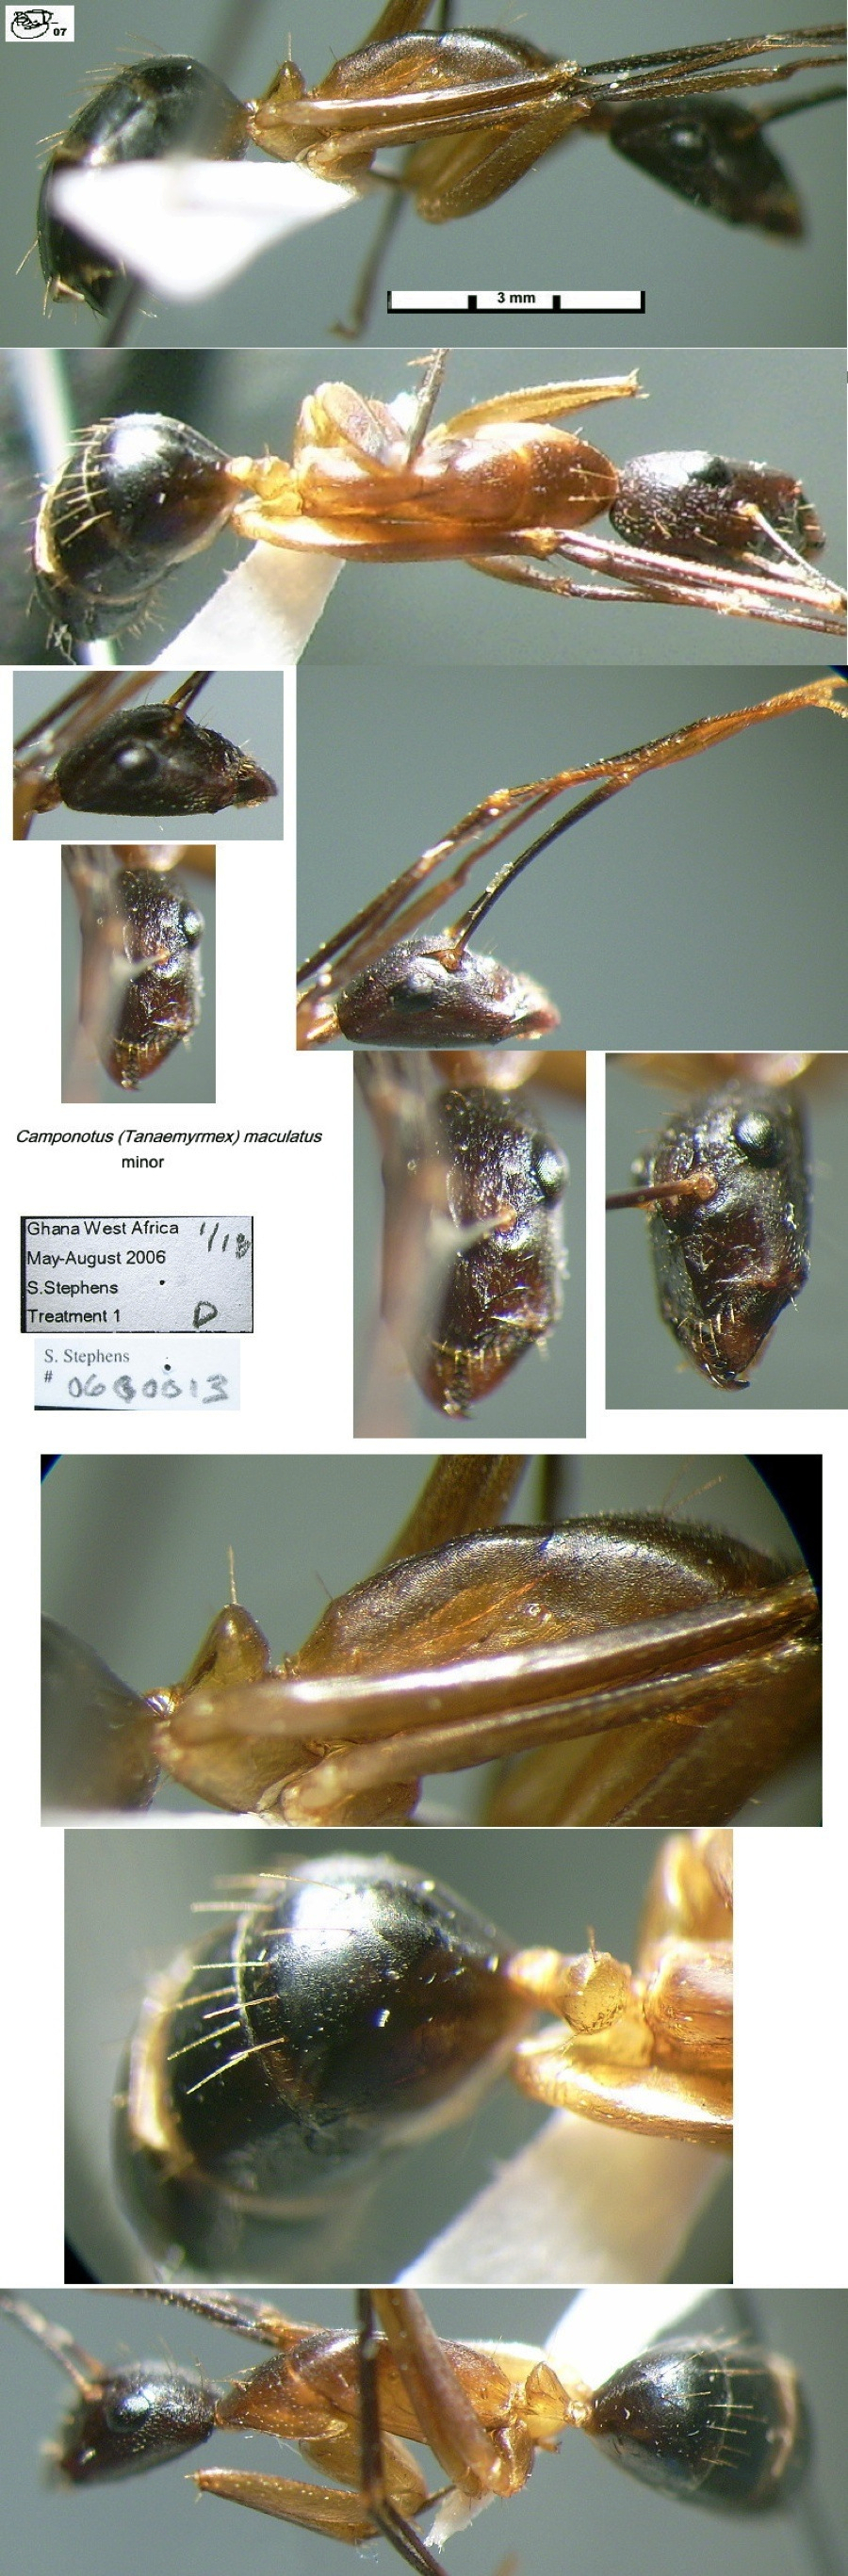 {Camponotus maculatus minor Ghana}